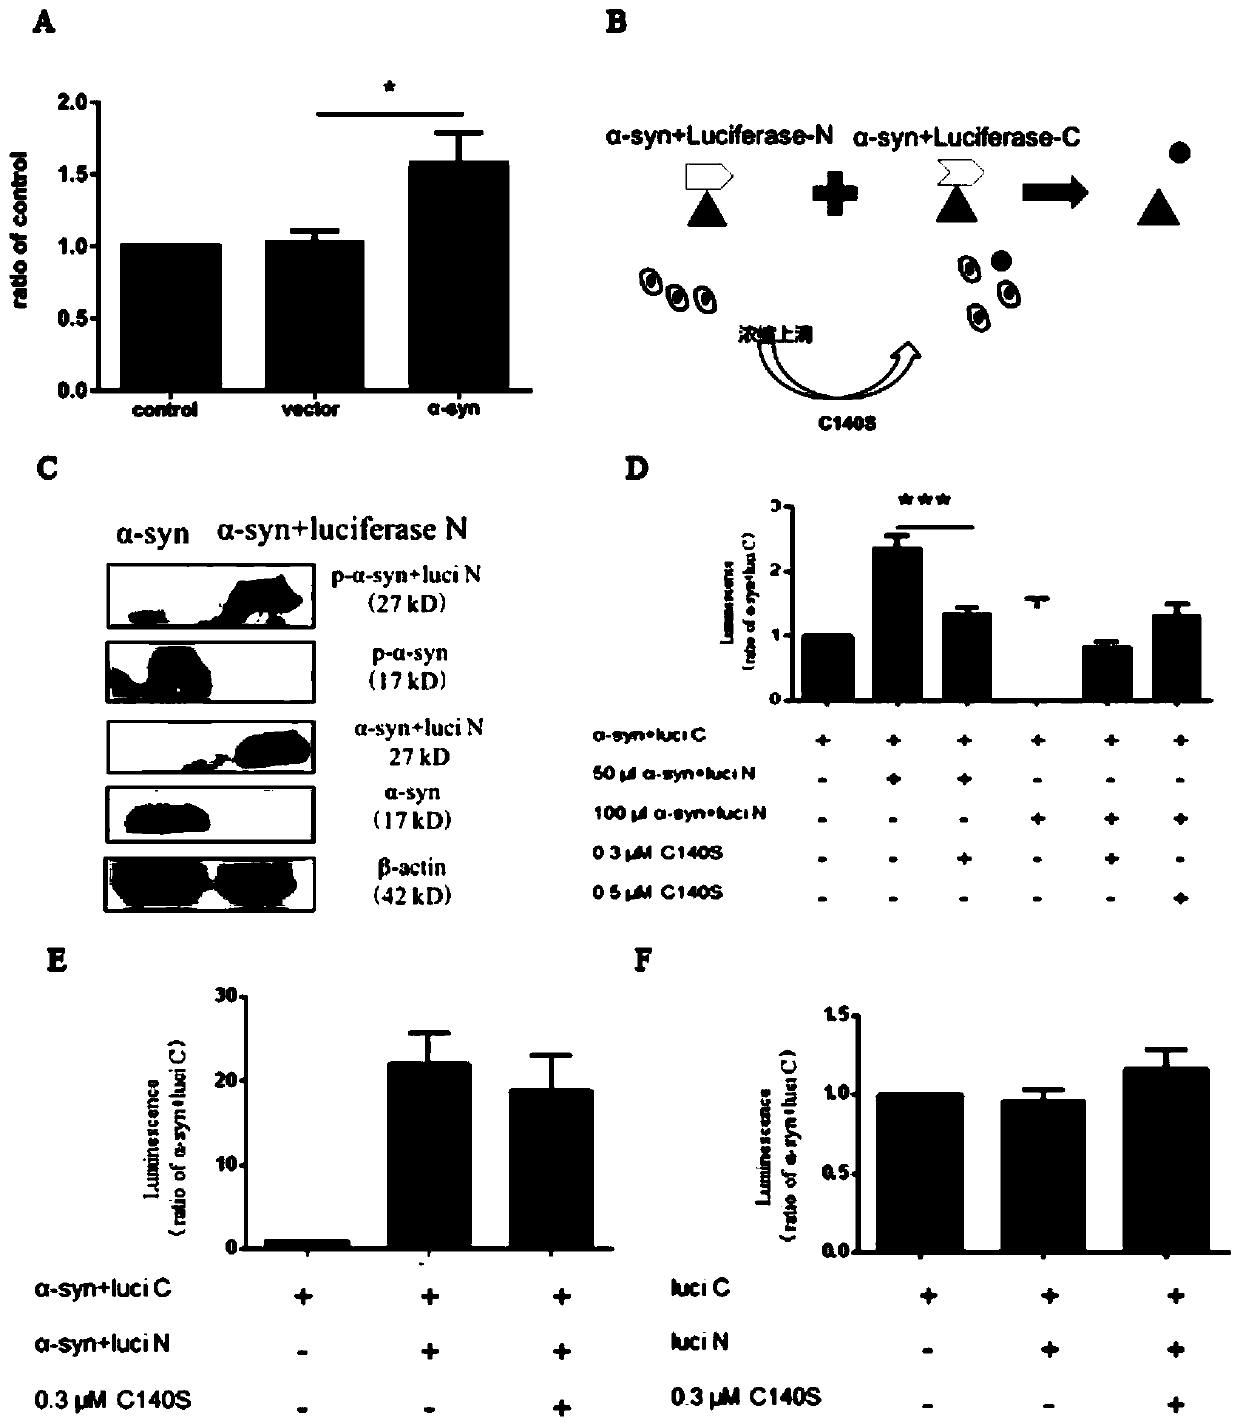 Treatment effect of monoclonal antibody on Parkinson's disease